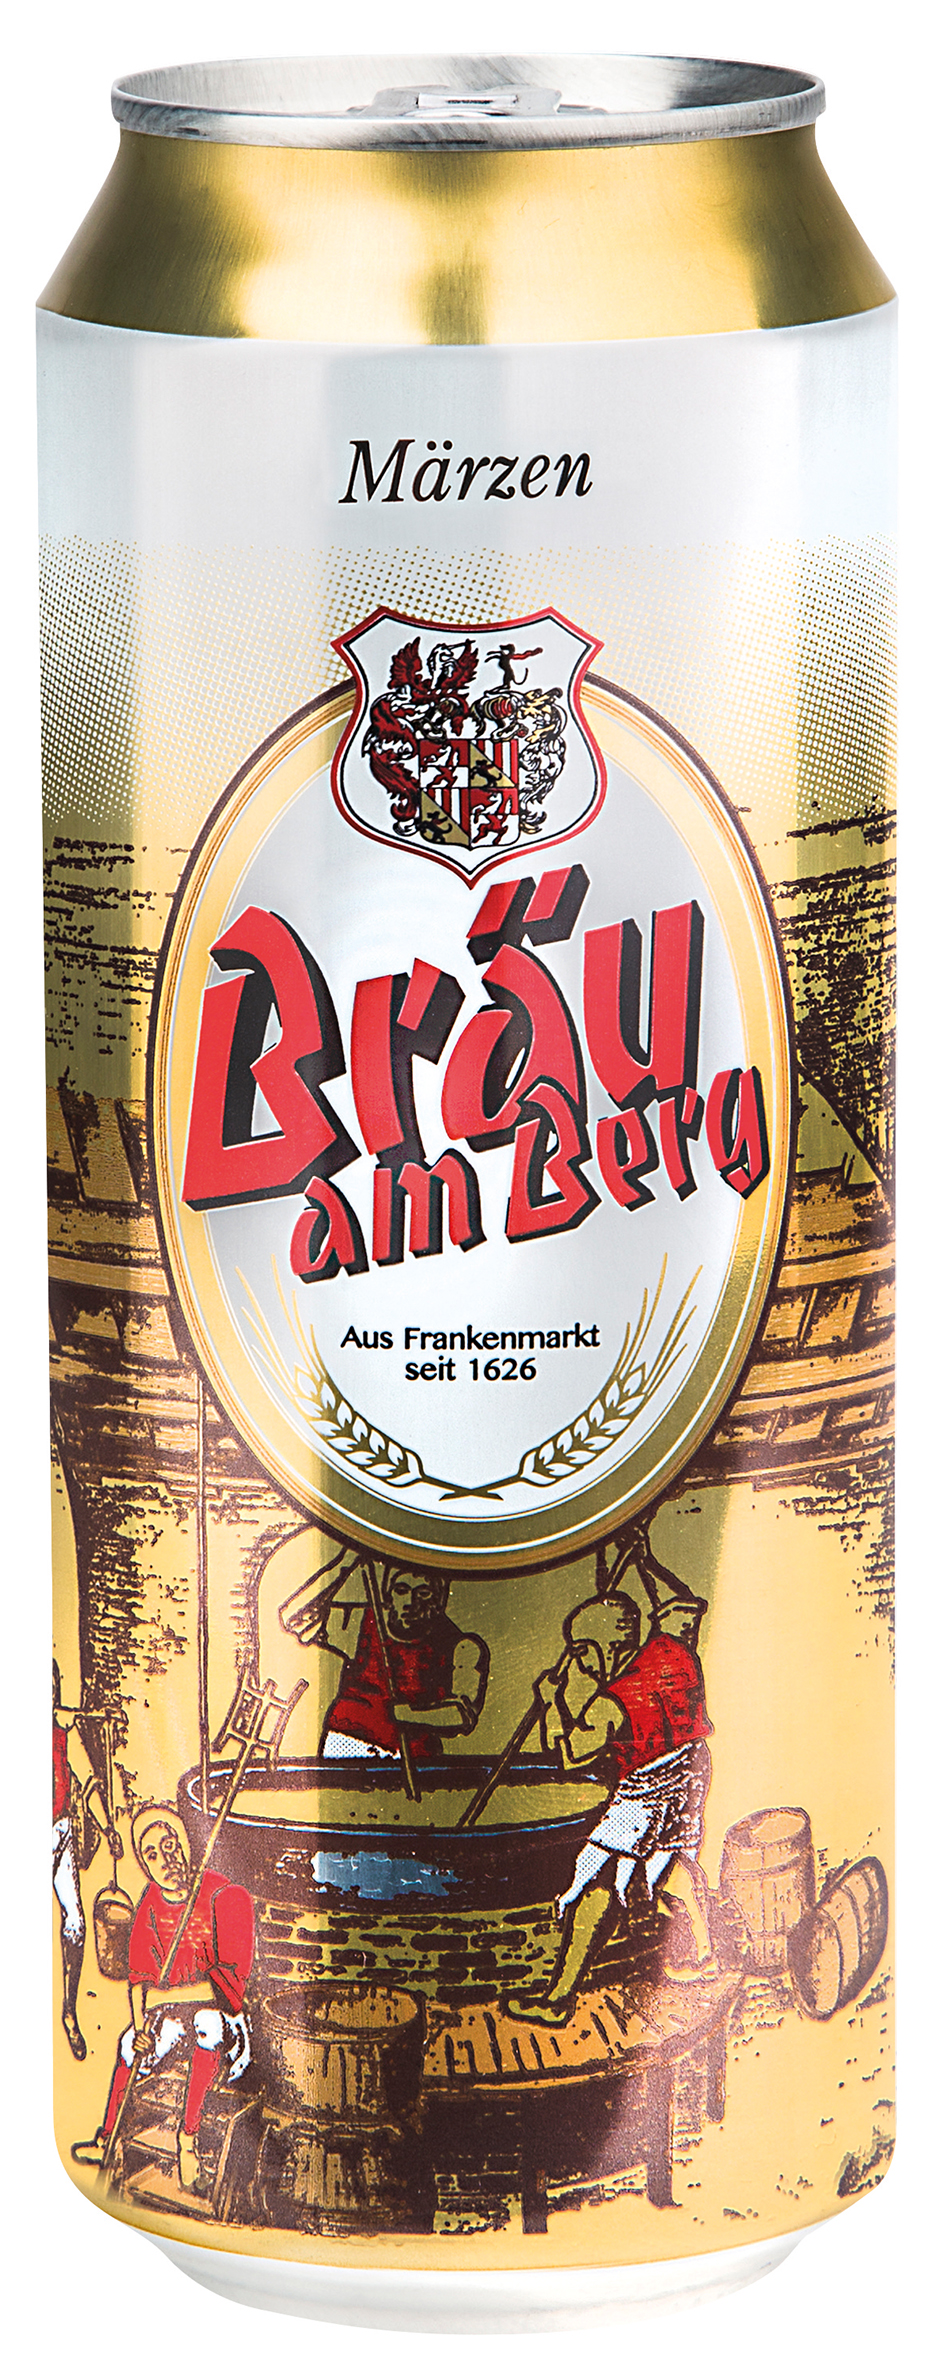 Kurpfalz brau. Пиво Kaiser Brau Lager. Kurpfalz Brau helles пиво. Пиво Kaiser Brau 0.568. Kurpfalz Brau ur Weizen пиво.